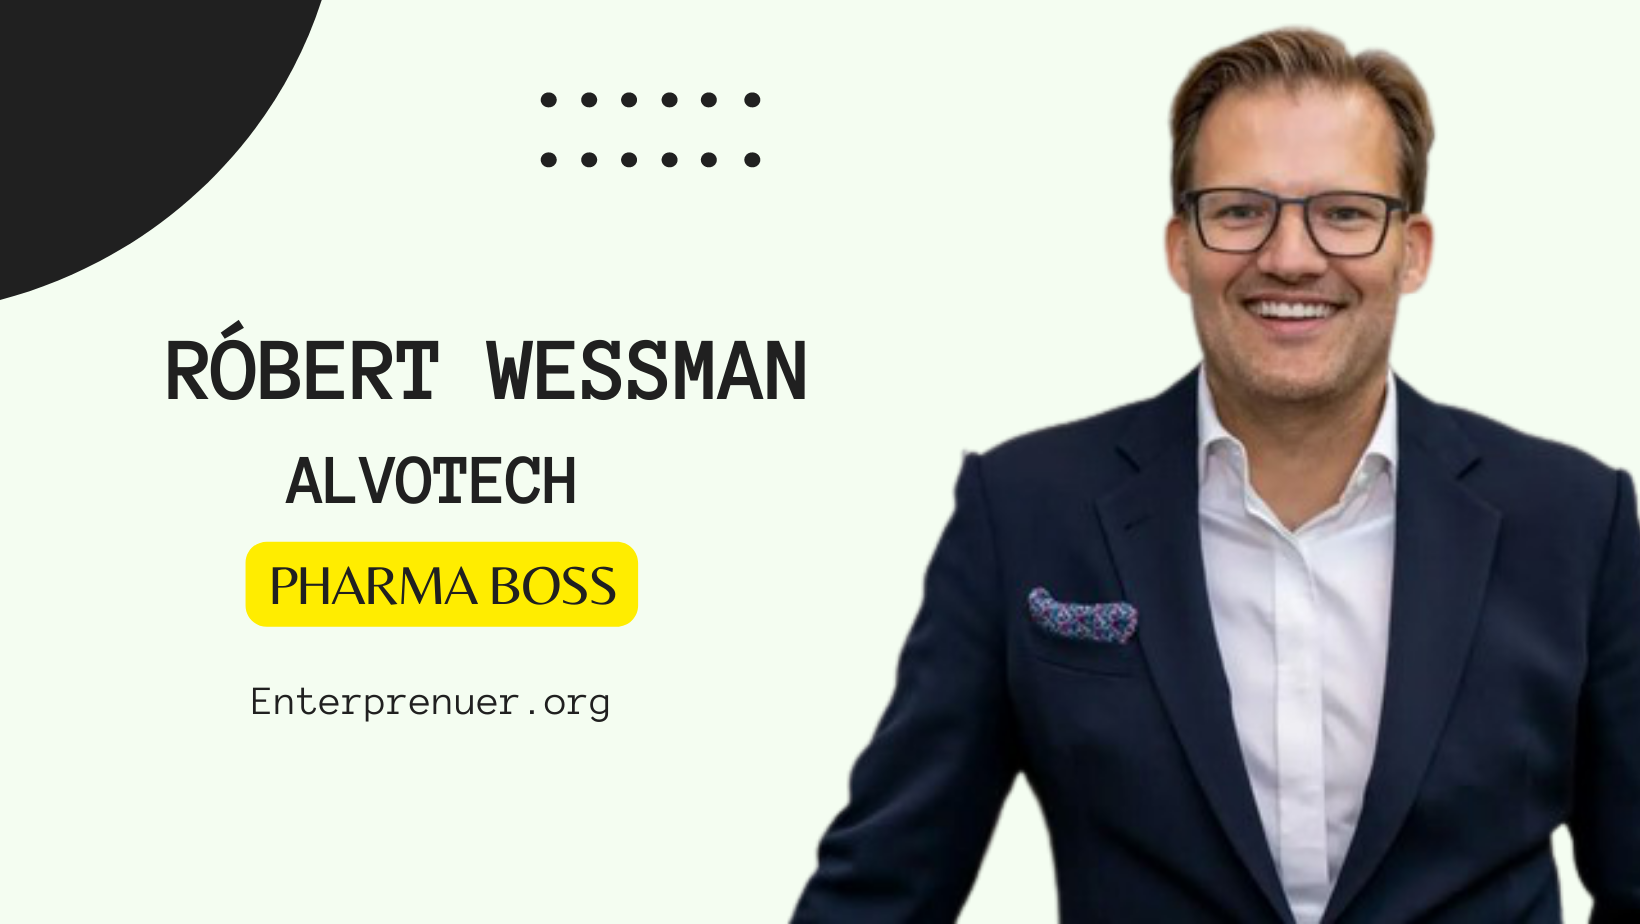 Meet Pharma Boss, Róbert Wessman, Founder of Alvotech